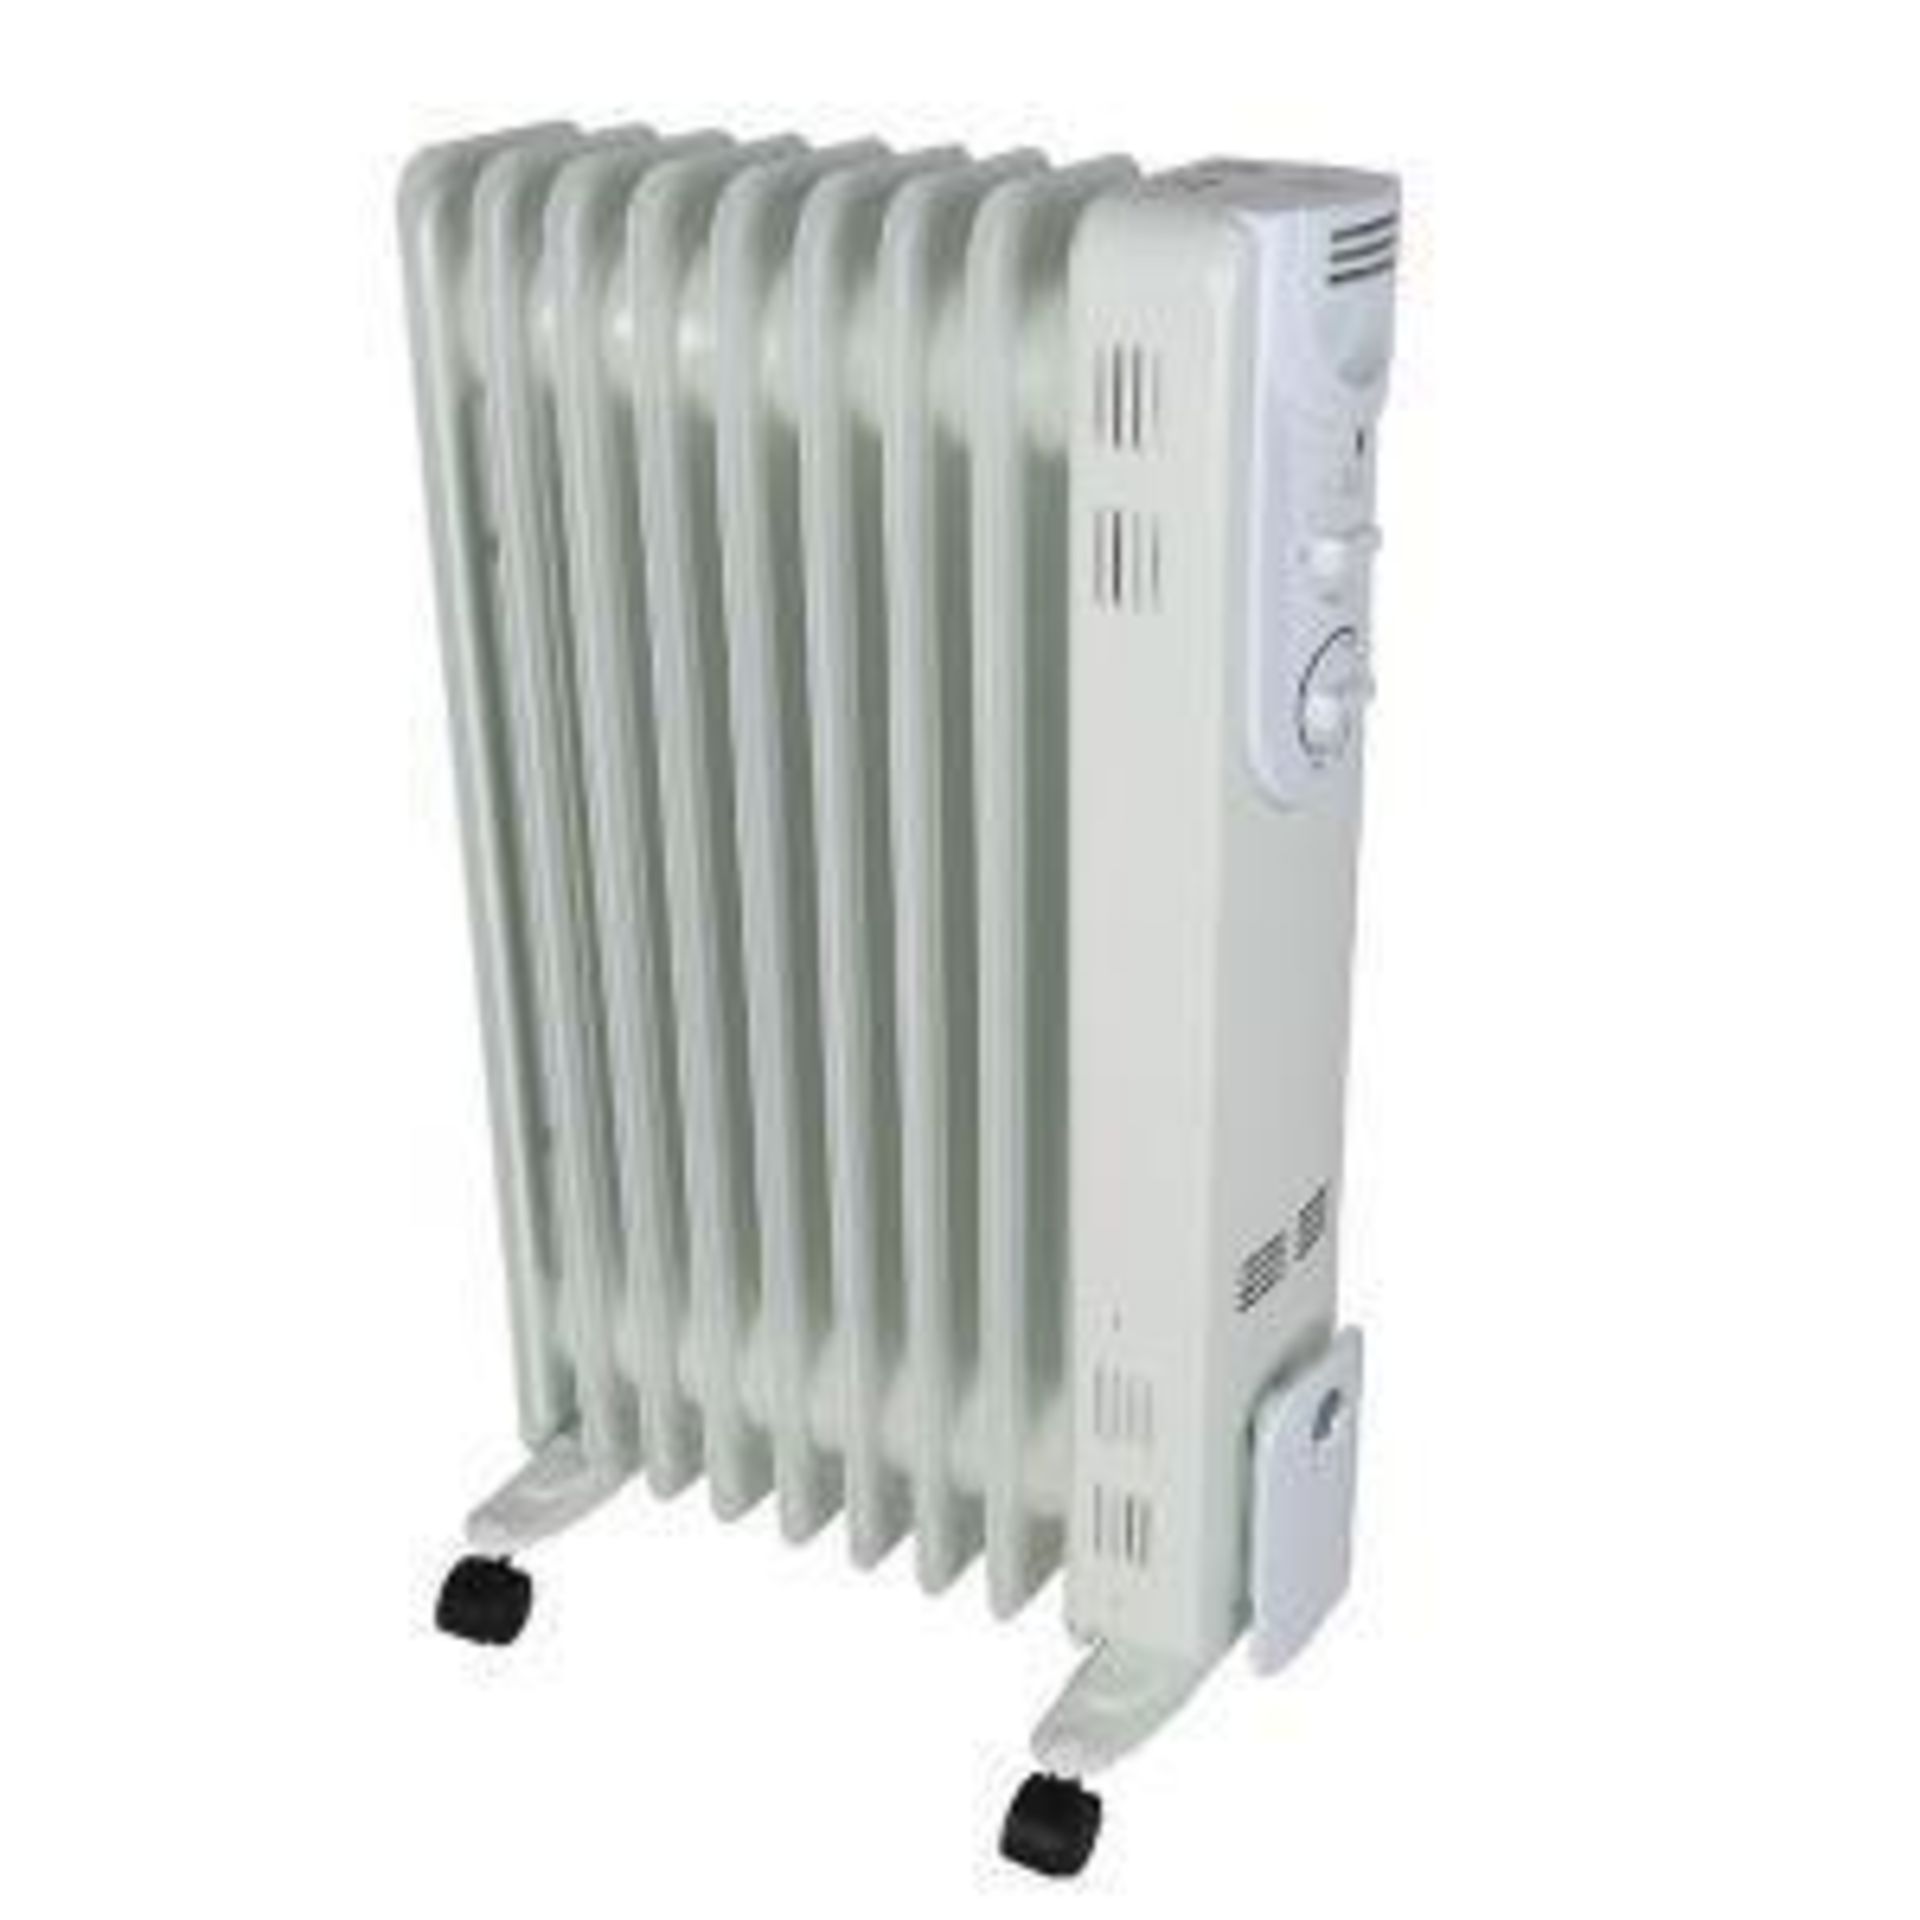 Electric Radiator Oil White Portable Freestanding 3 Heat Settings 2000W (R48)Oil-filled radiator